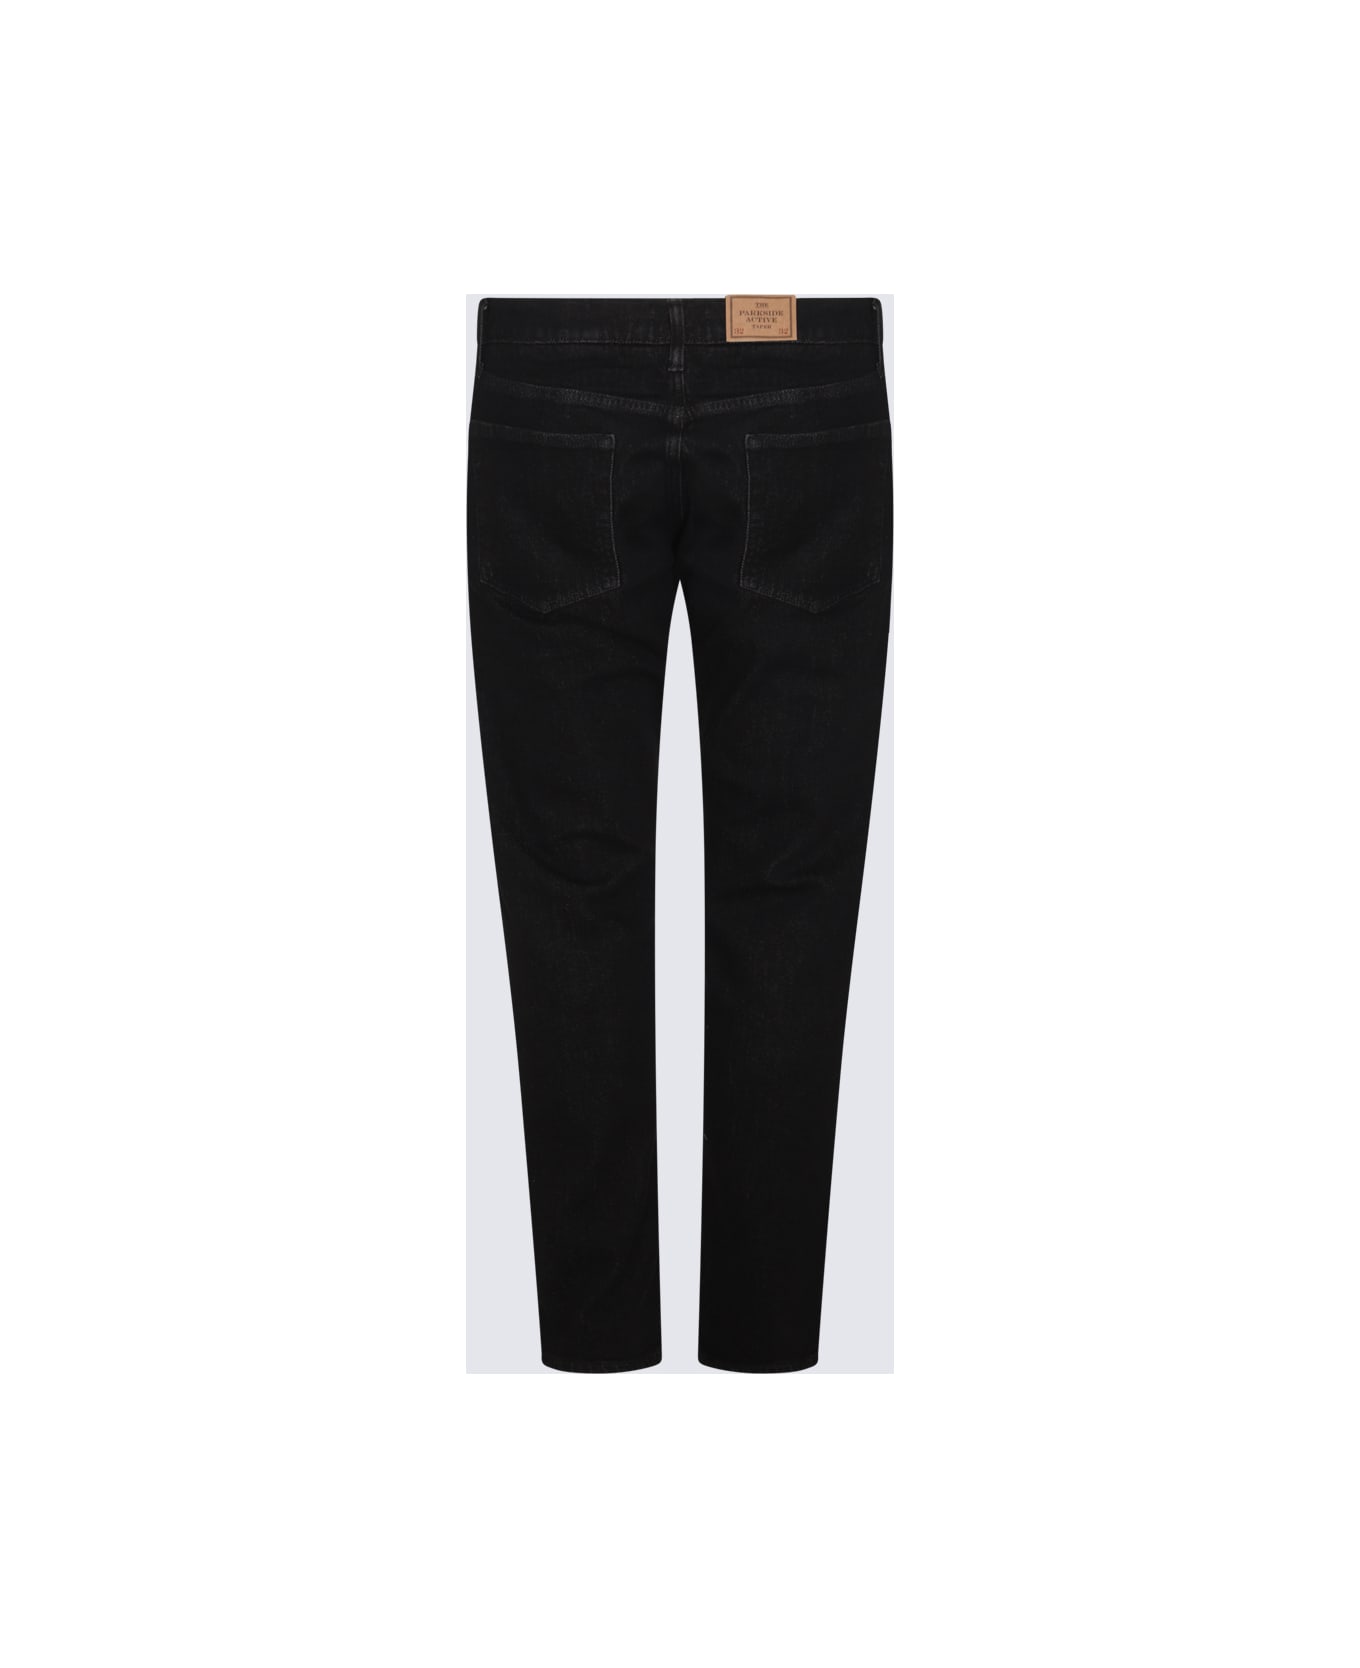 Polo Ralph Lauren Black Cotton Denim Jeans - HARRIS V2